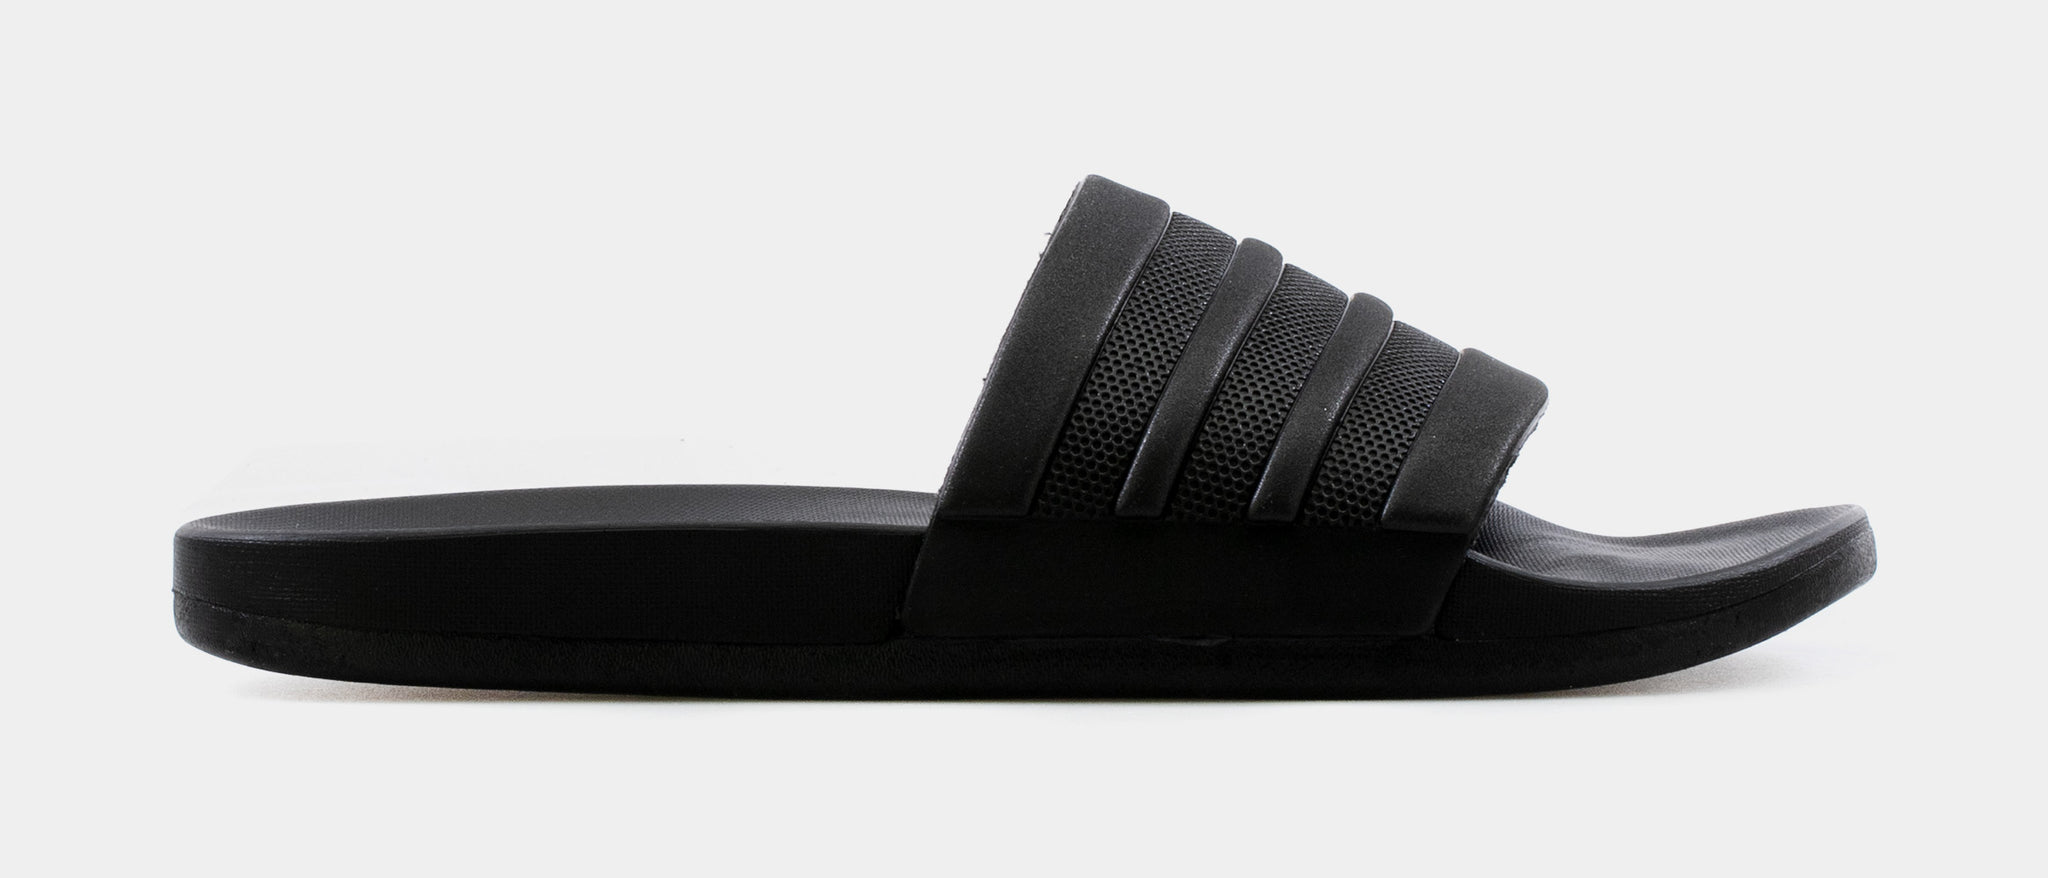 Slide Adilette adidas Mens Shoe Black Mono – Palace Cloudfoam Sandal Plus S82137